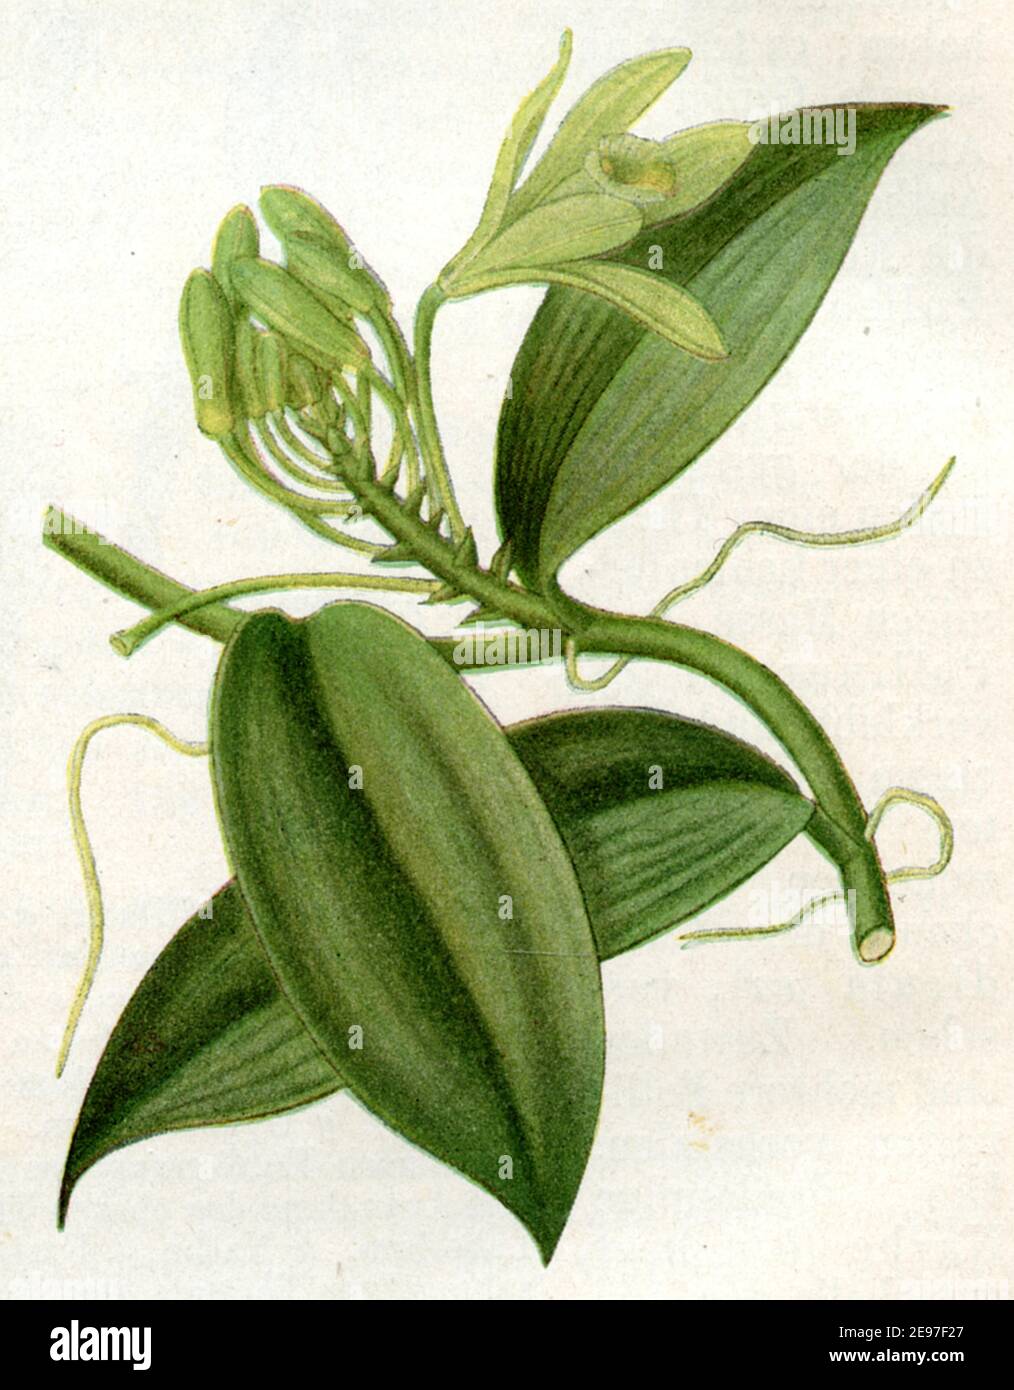 Vanille, branche florale / vanille planifolia / vanille, Echte Gewürz- Blühender Zweig / livre botanique, 1900) Banque D'Images